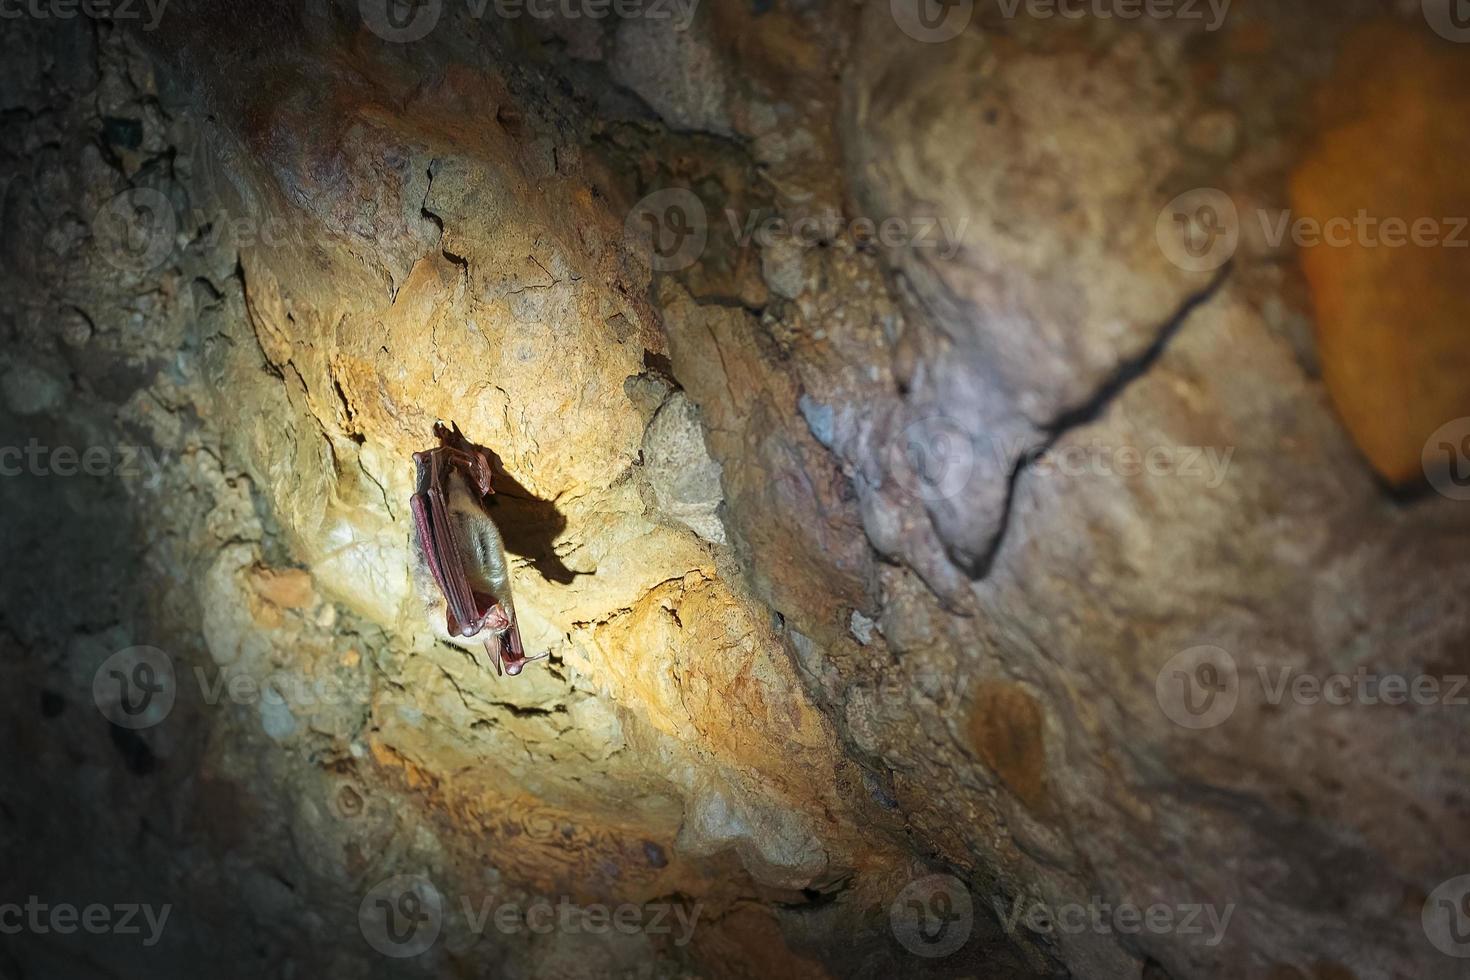 A brown bat hangs upside down in a cave. Night predators in the wild photo